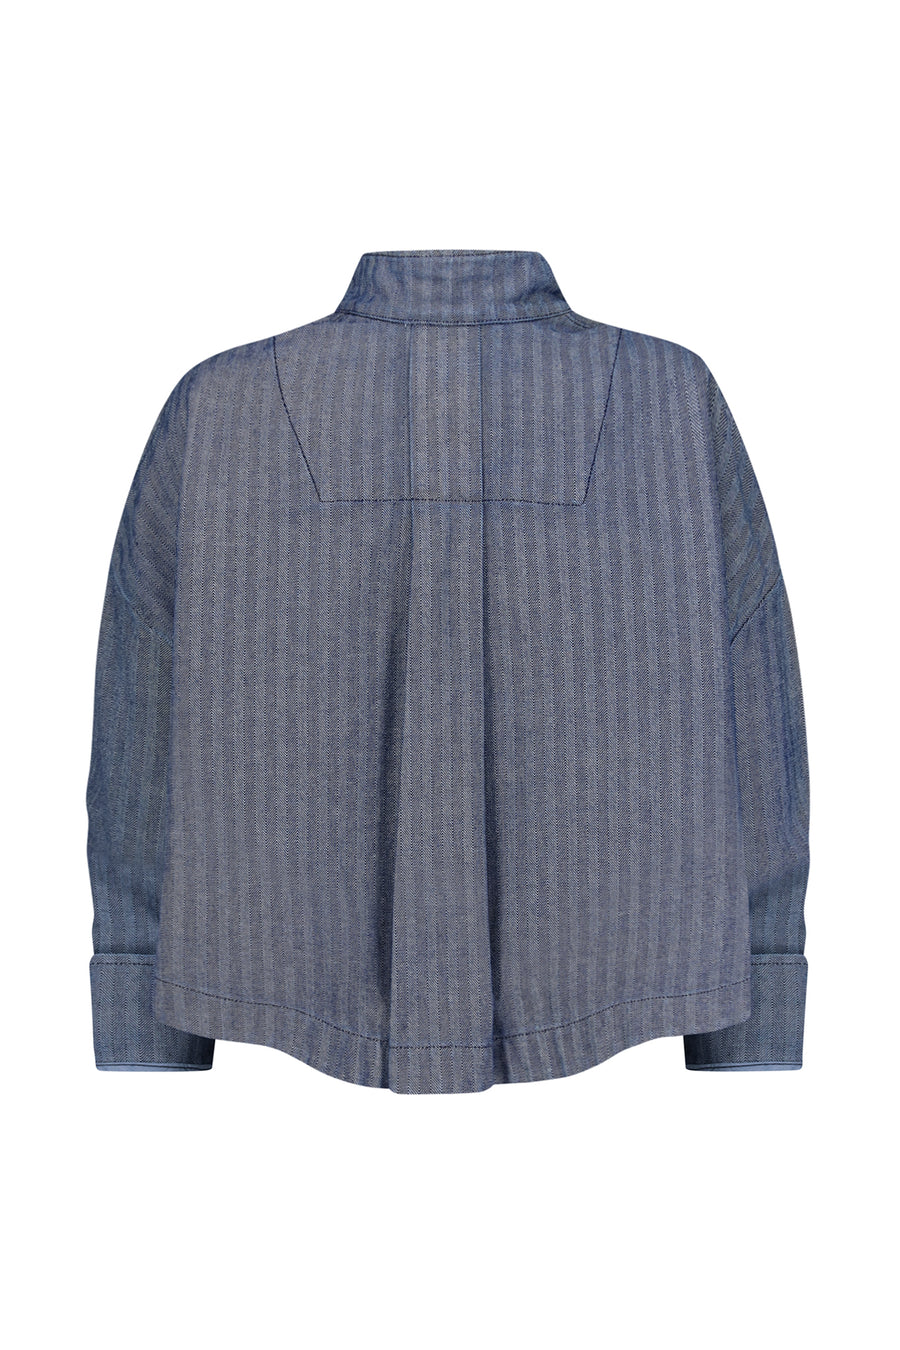 Lianne Washed Herringbone Denim Multi Pocket Cropped Jacket